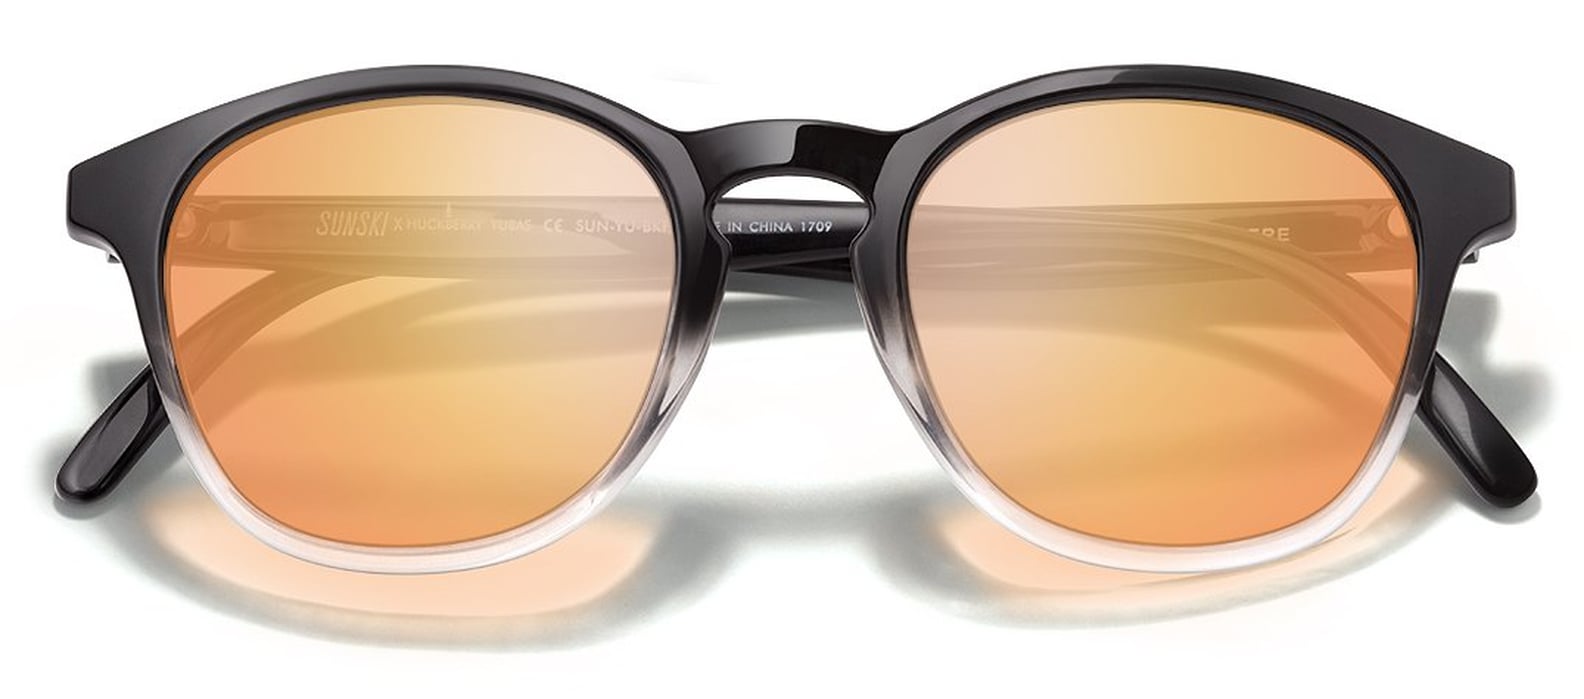 Sunski Yuba Sunglasses Review | POPSUGAR Fashion